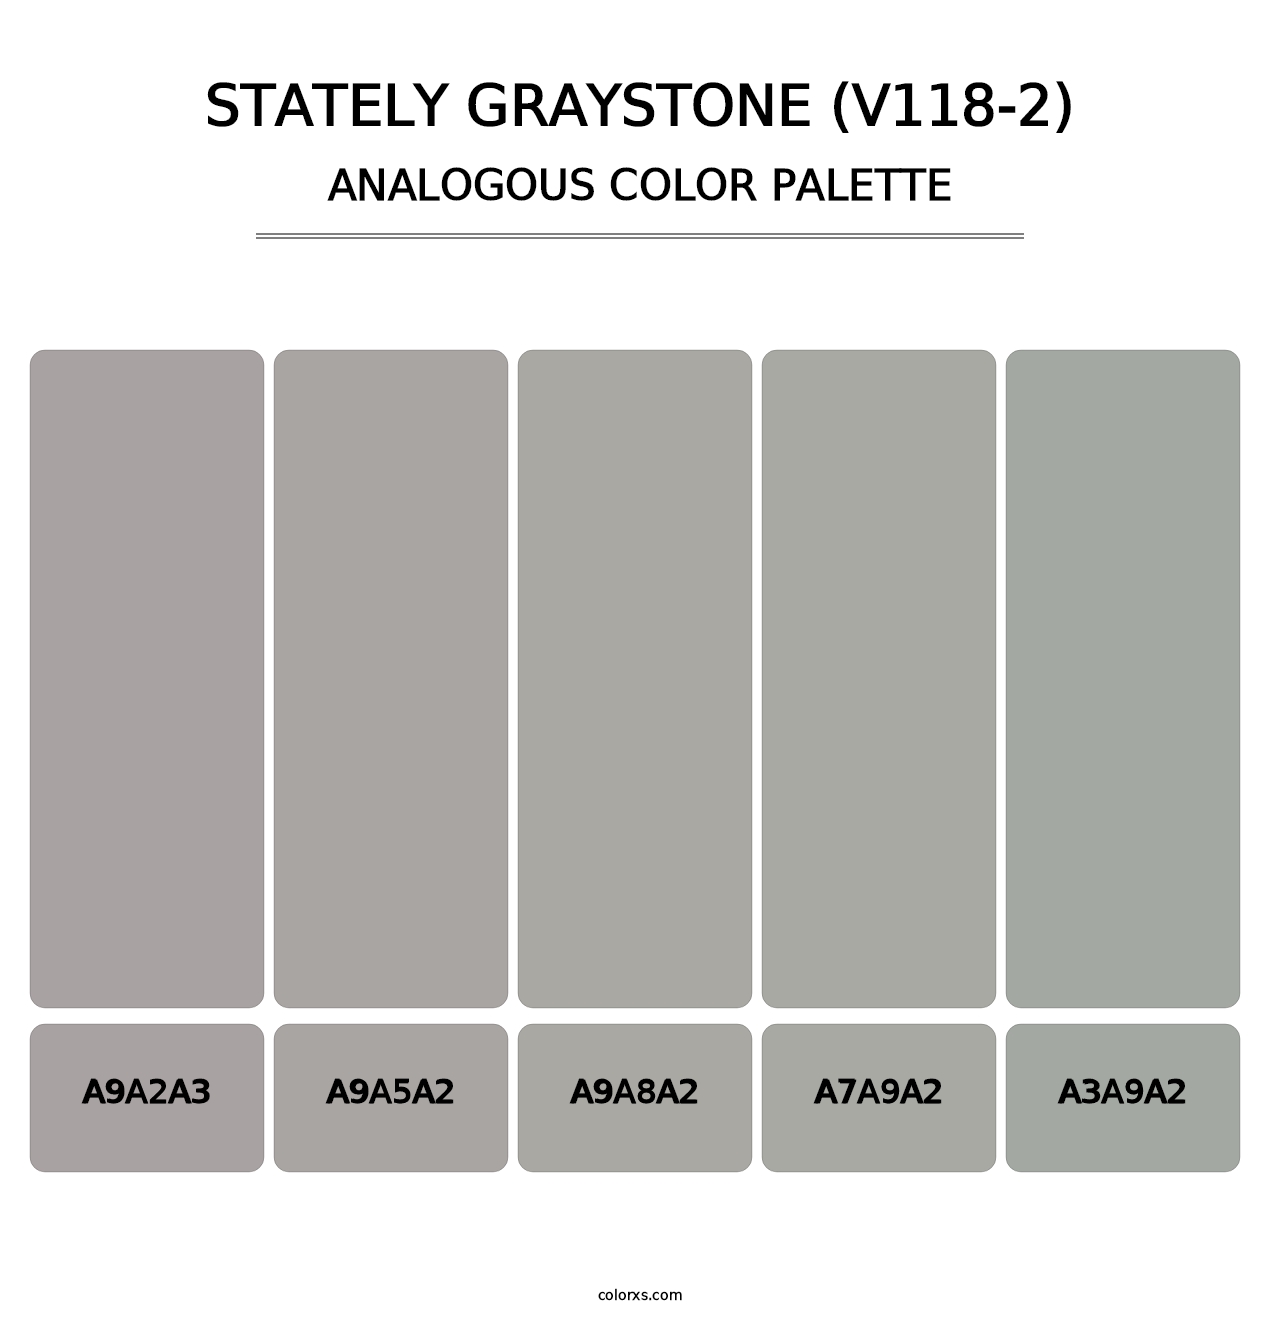 Stately Graystone (V118-2) - Analogous Color Palette